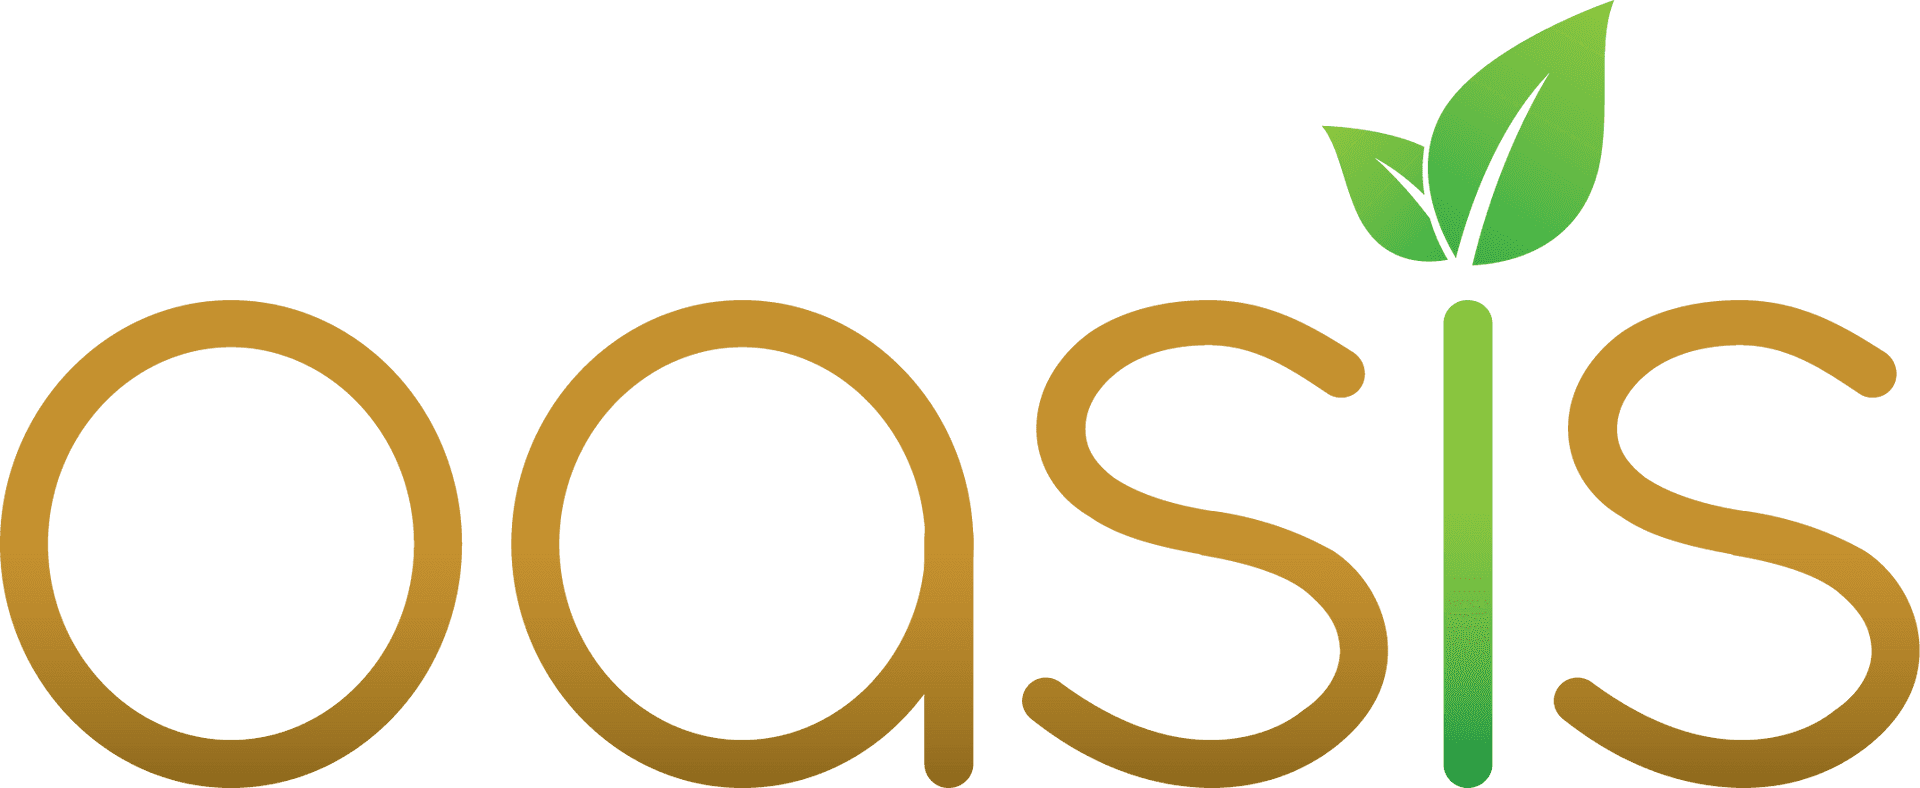 Oasis Brand Logo PNG